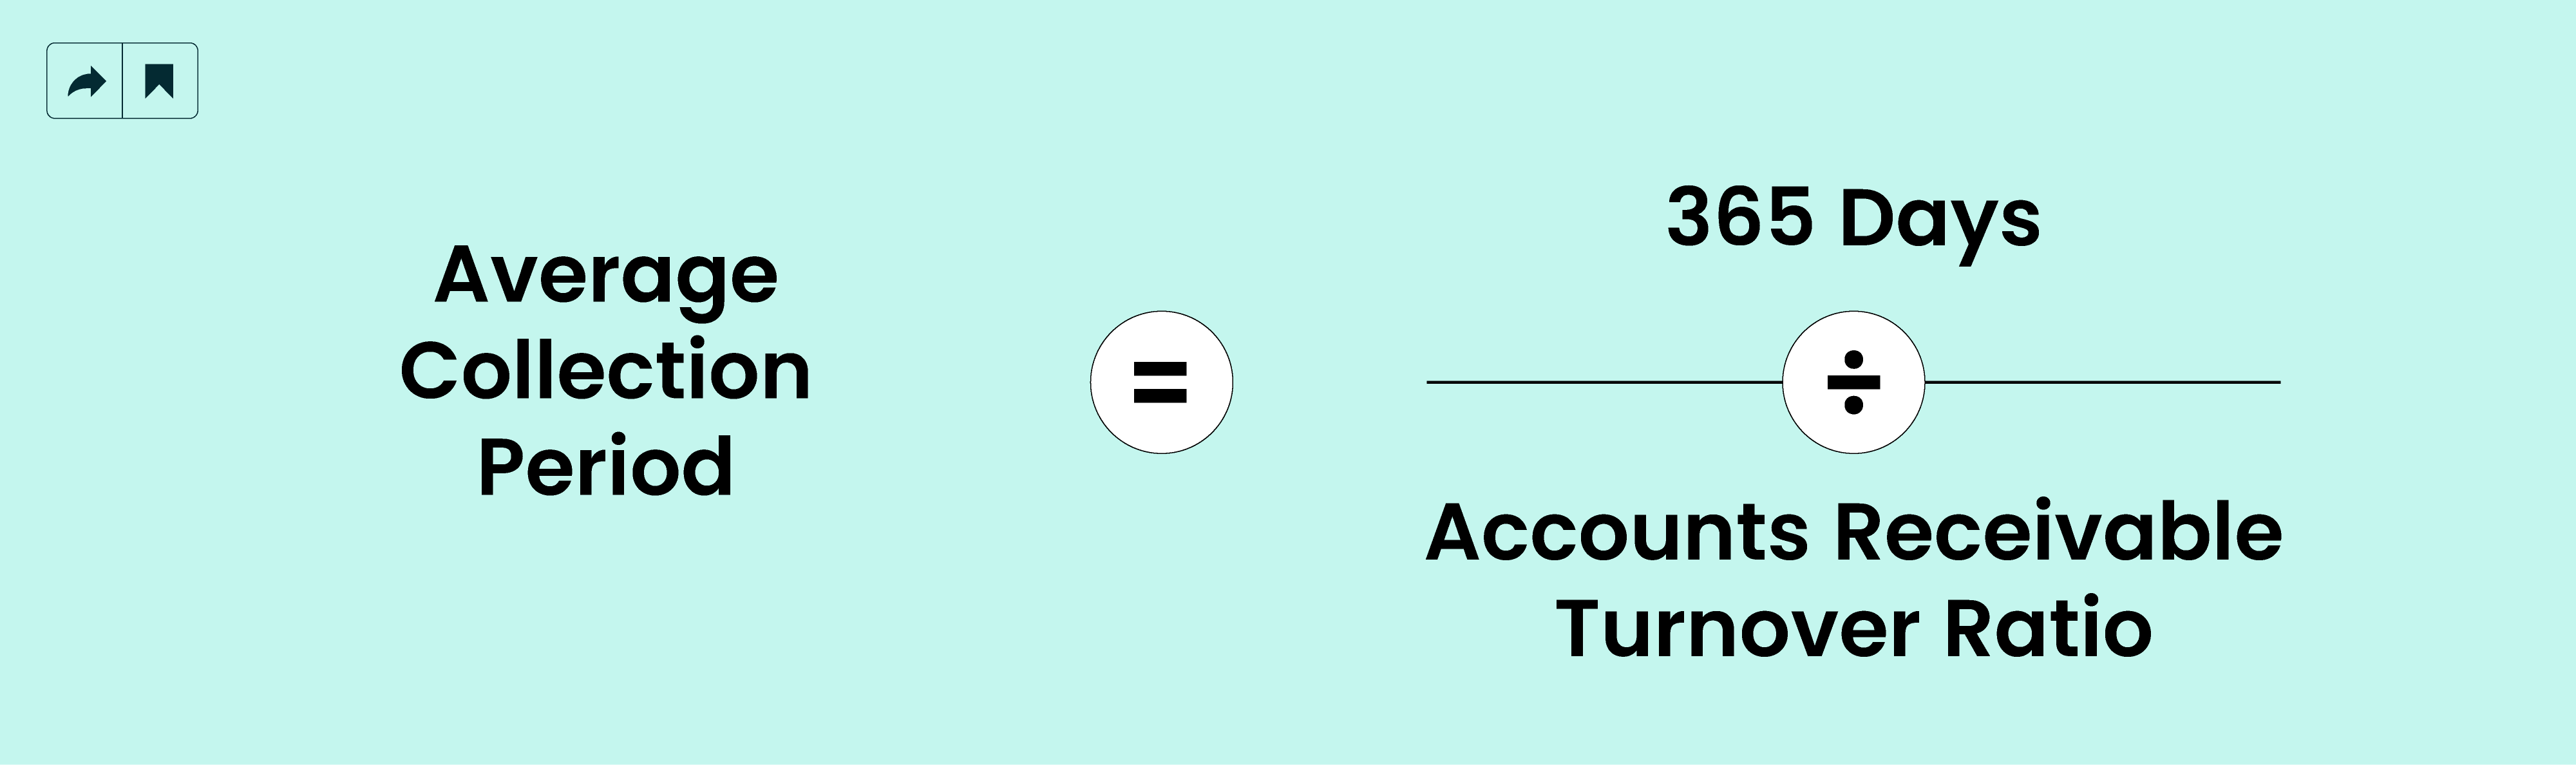 Average Collection Period - Account receivable formula